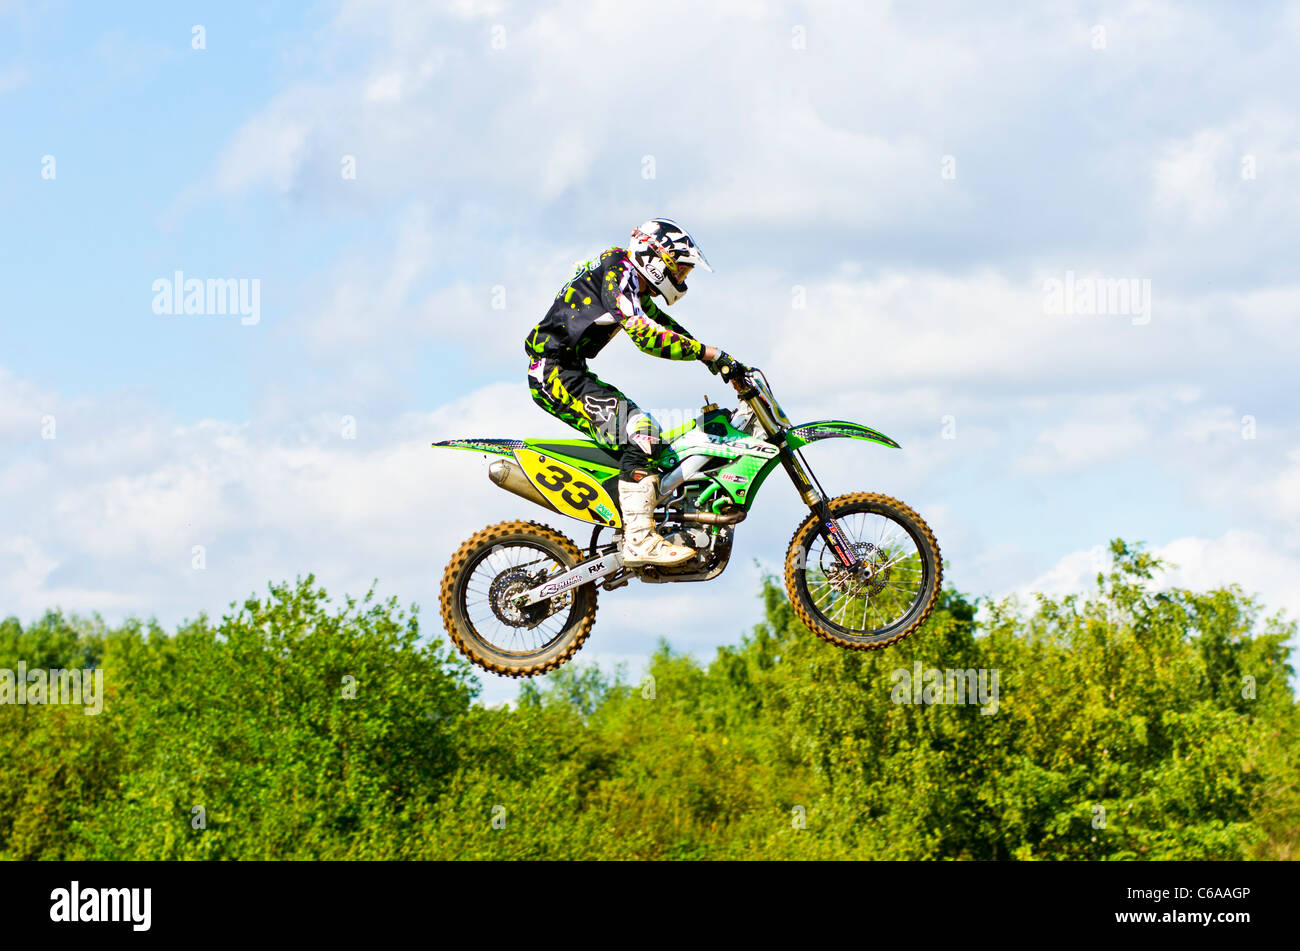 Course de motocross @ Finningley, Yorkshire, Royaume-Uni Banque D'Images